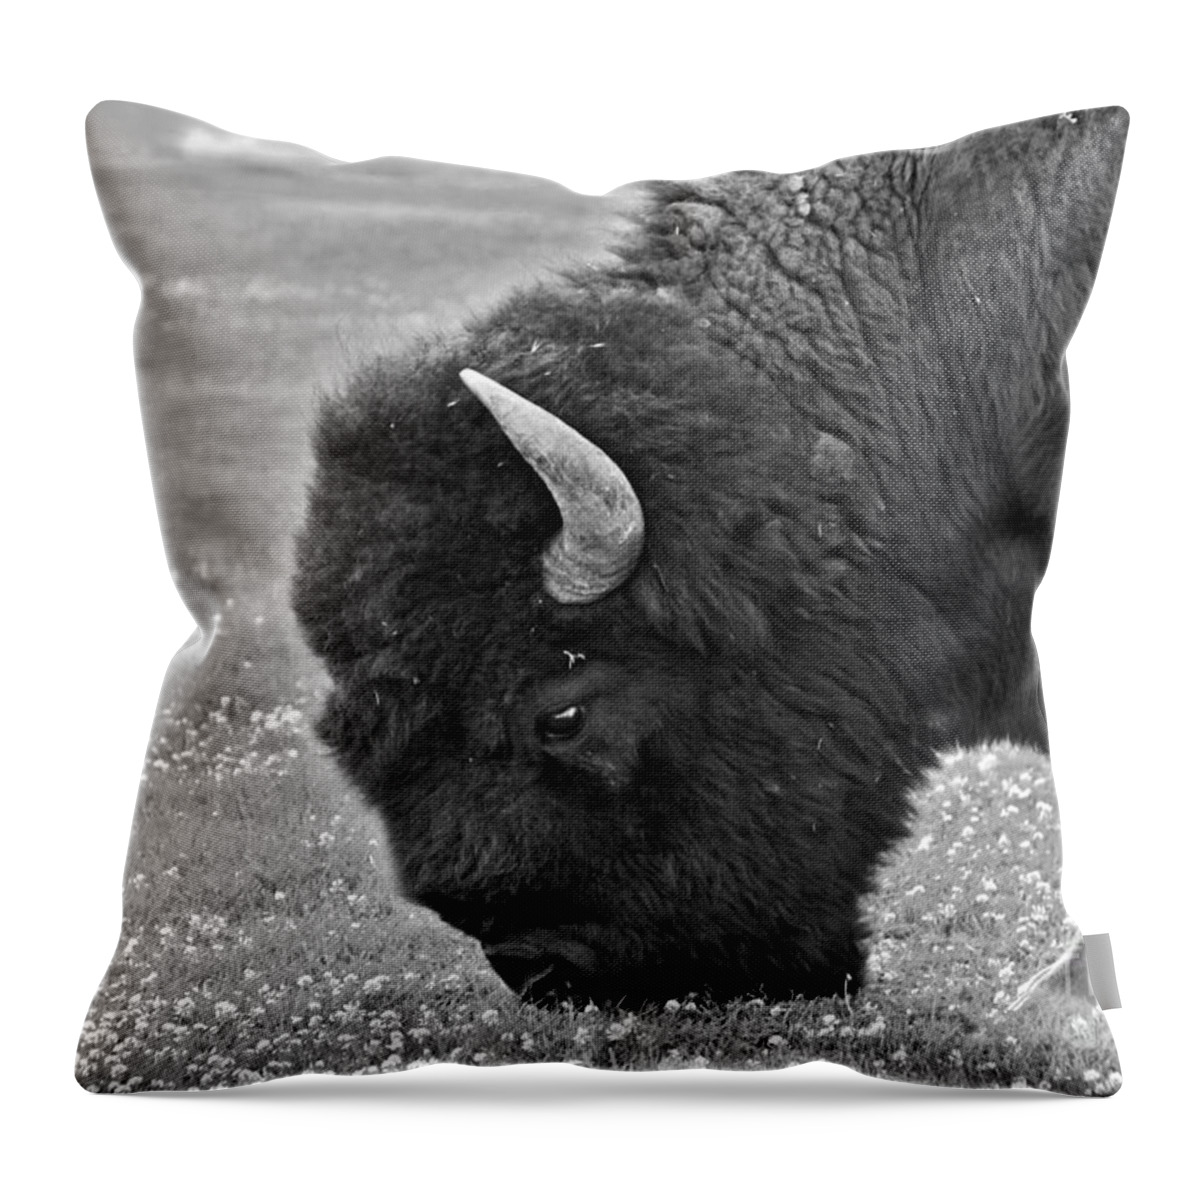 Buffalo Throw Pillow featuring the photograph Bison Bull Grazing on Clover by Karon Melillo DeVega